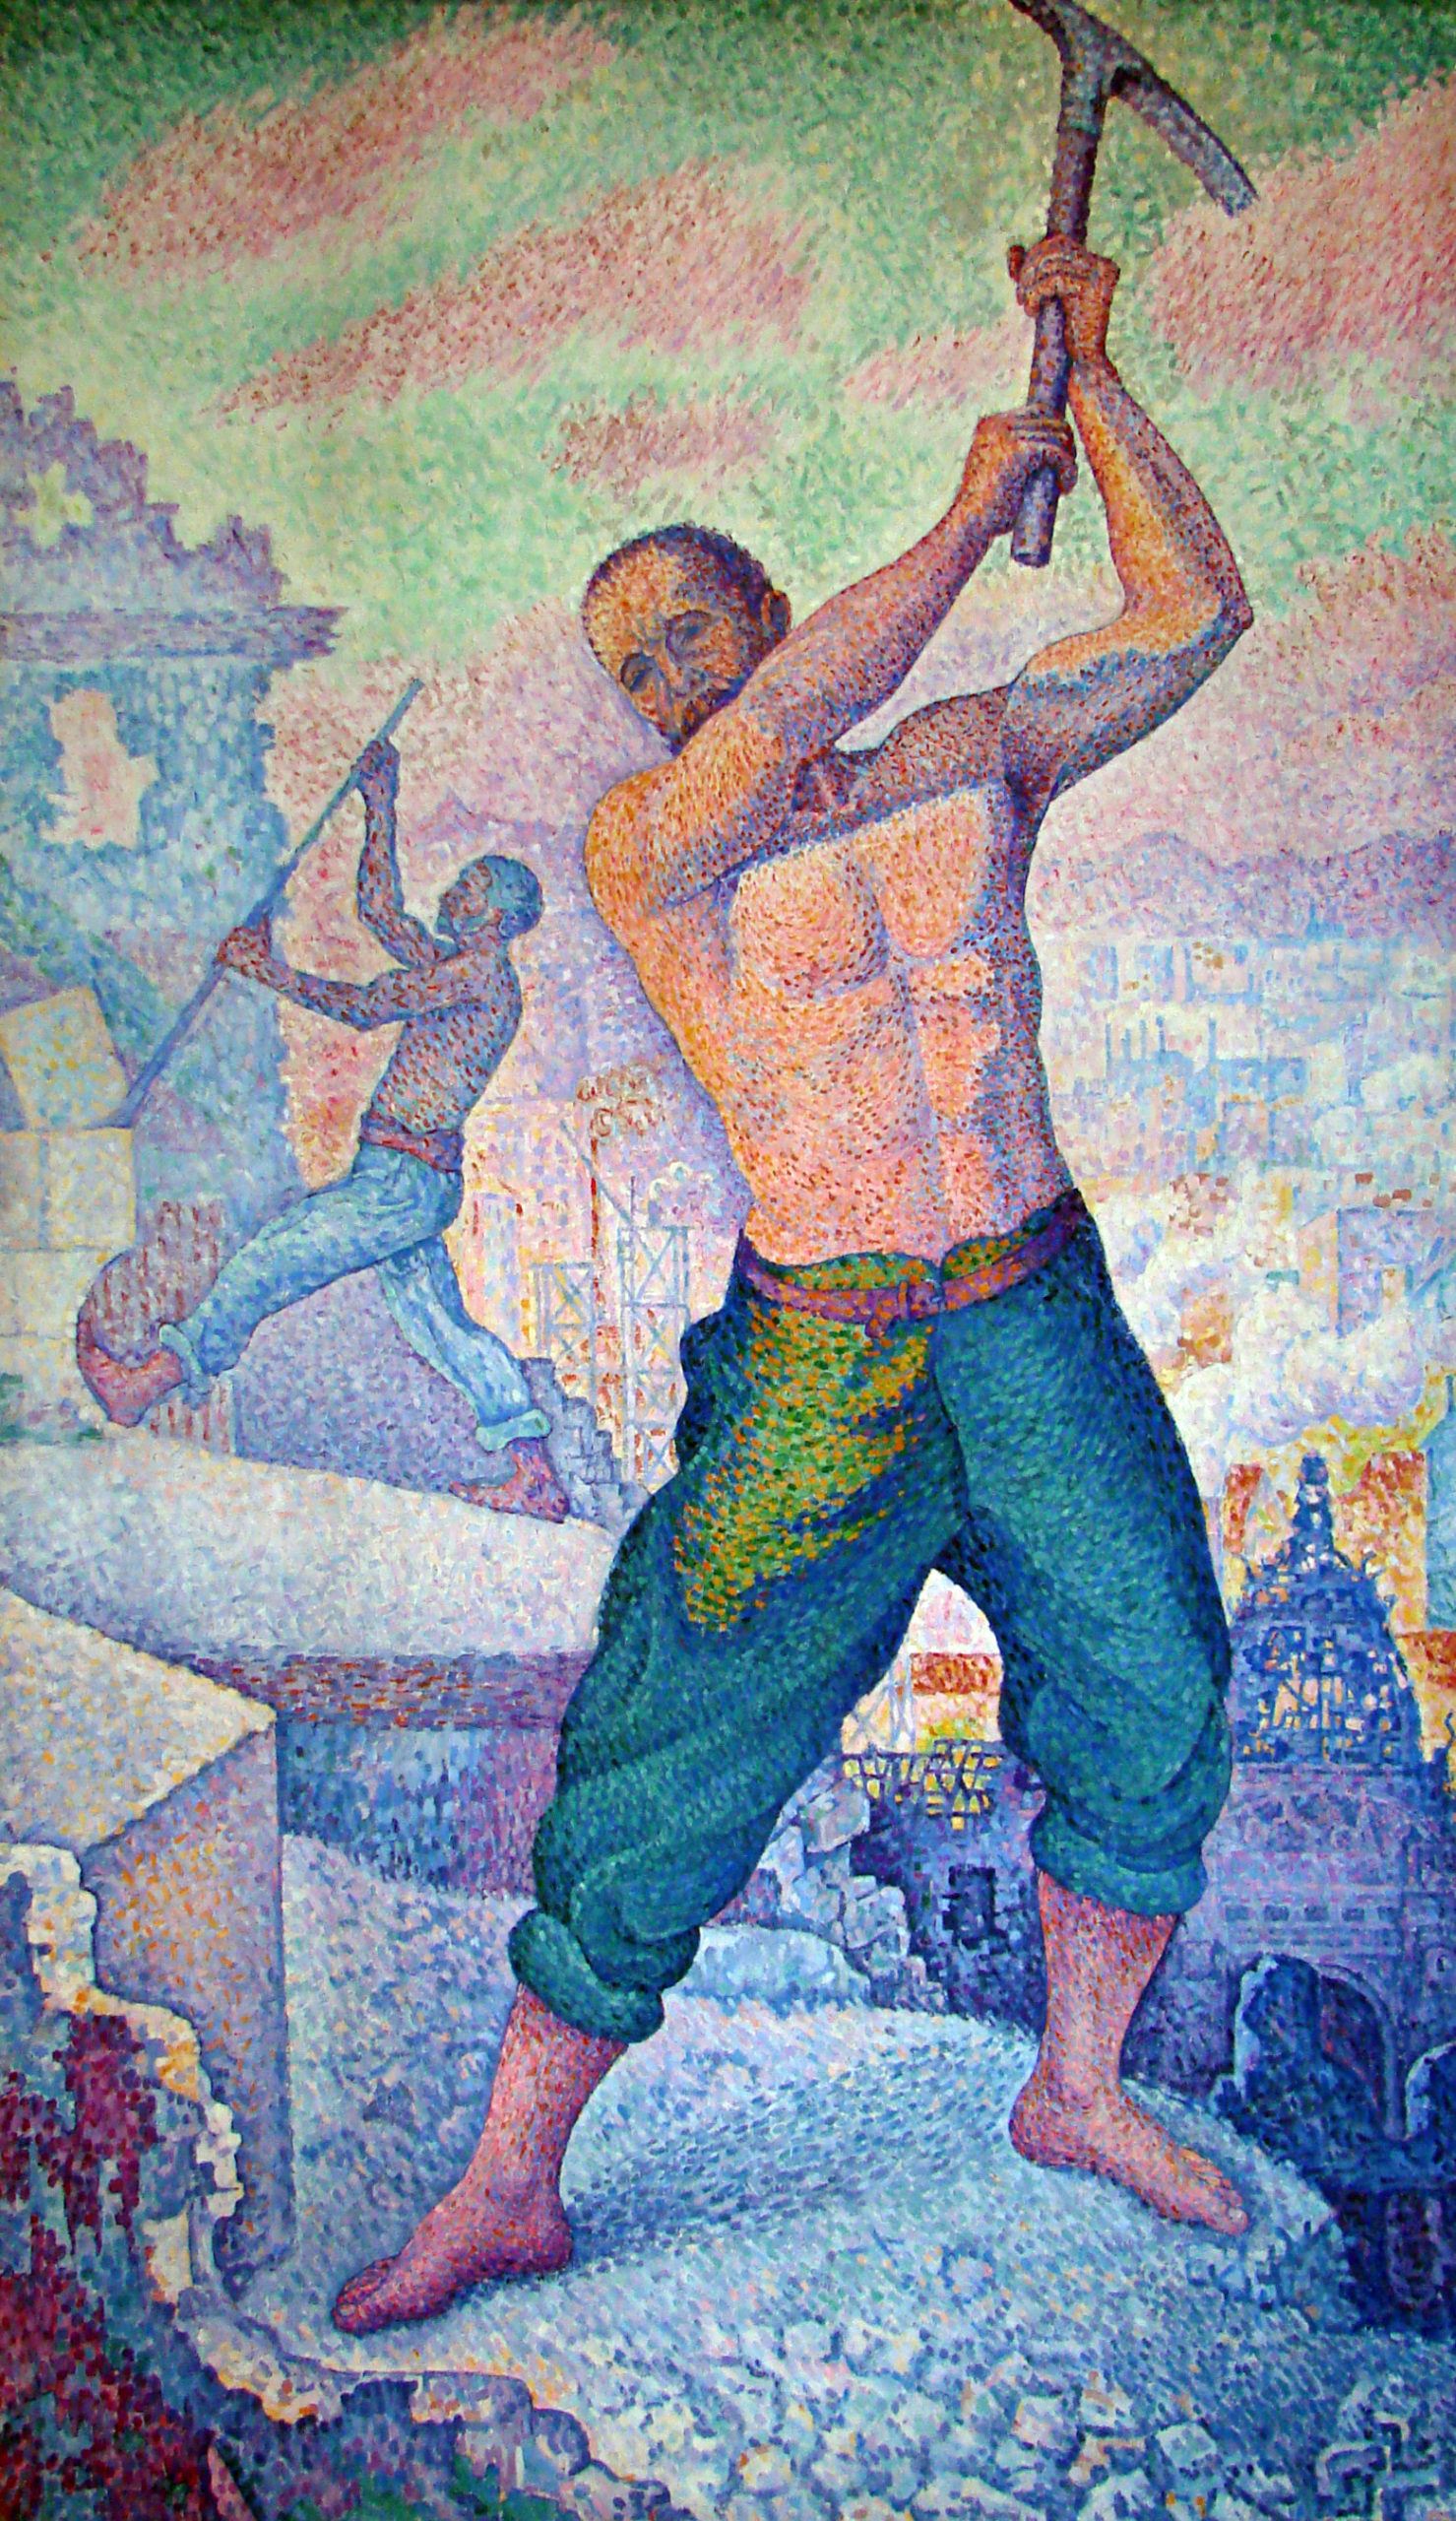 Paul Signac, The Demolition Worker, 1887-89, oil on canvas, 250 x 152 cm (Musée d’Orsay)